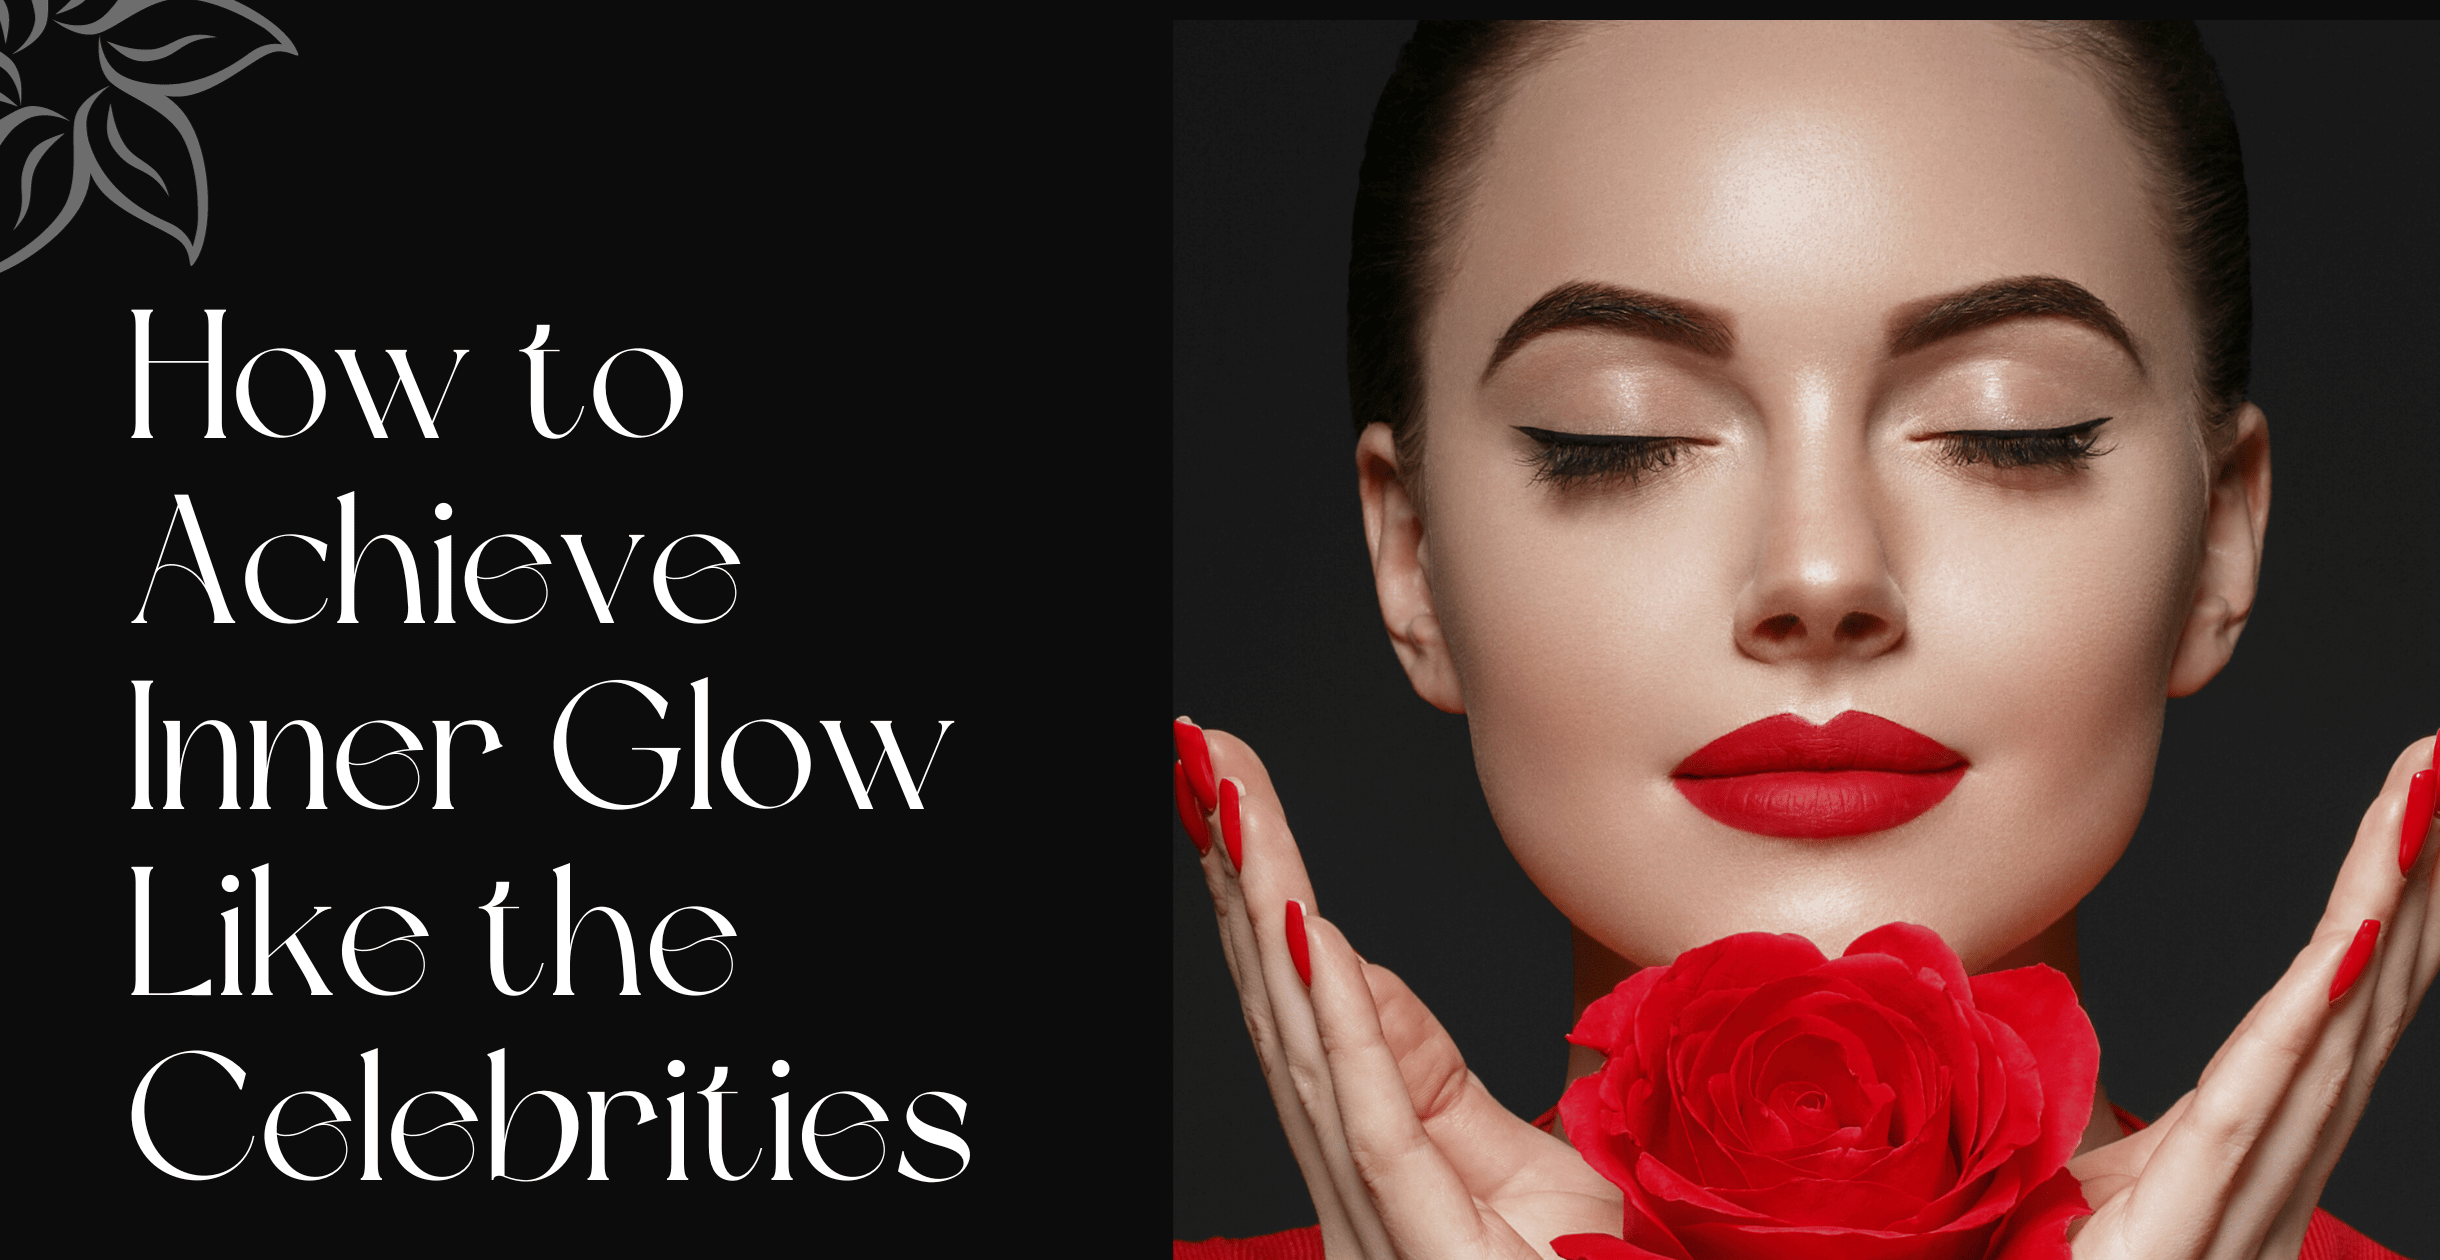 How to Achieve Inner Glow Like the Celebrities